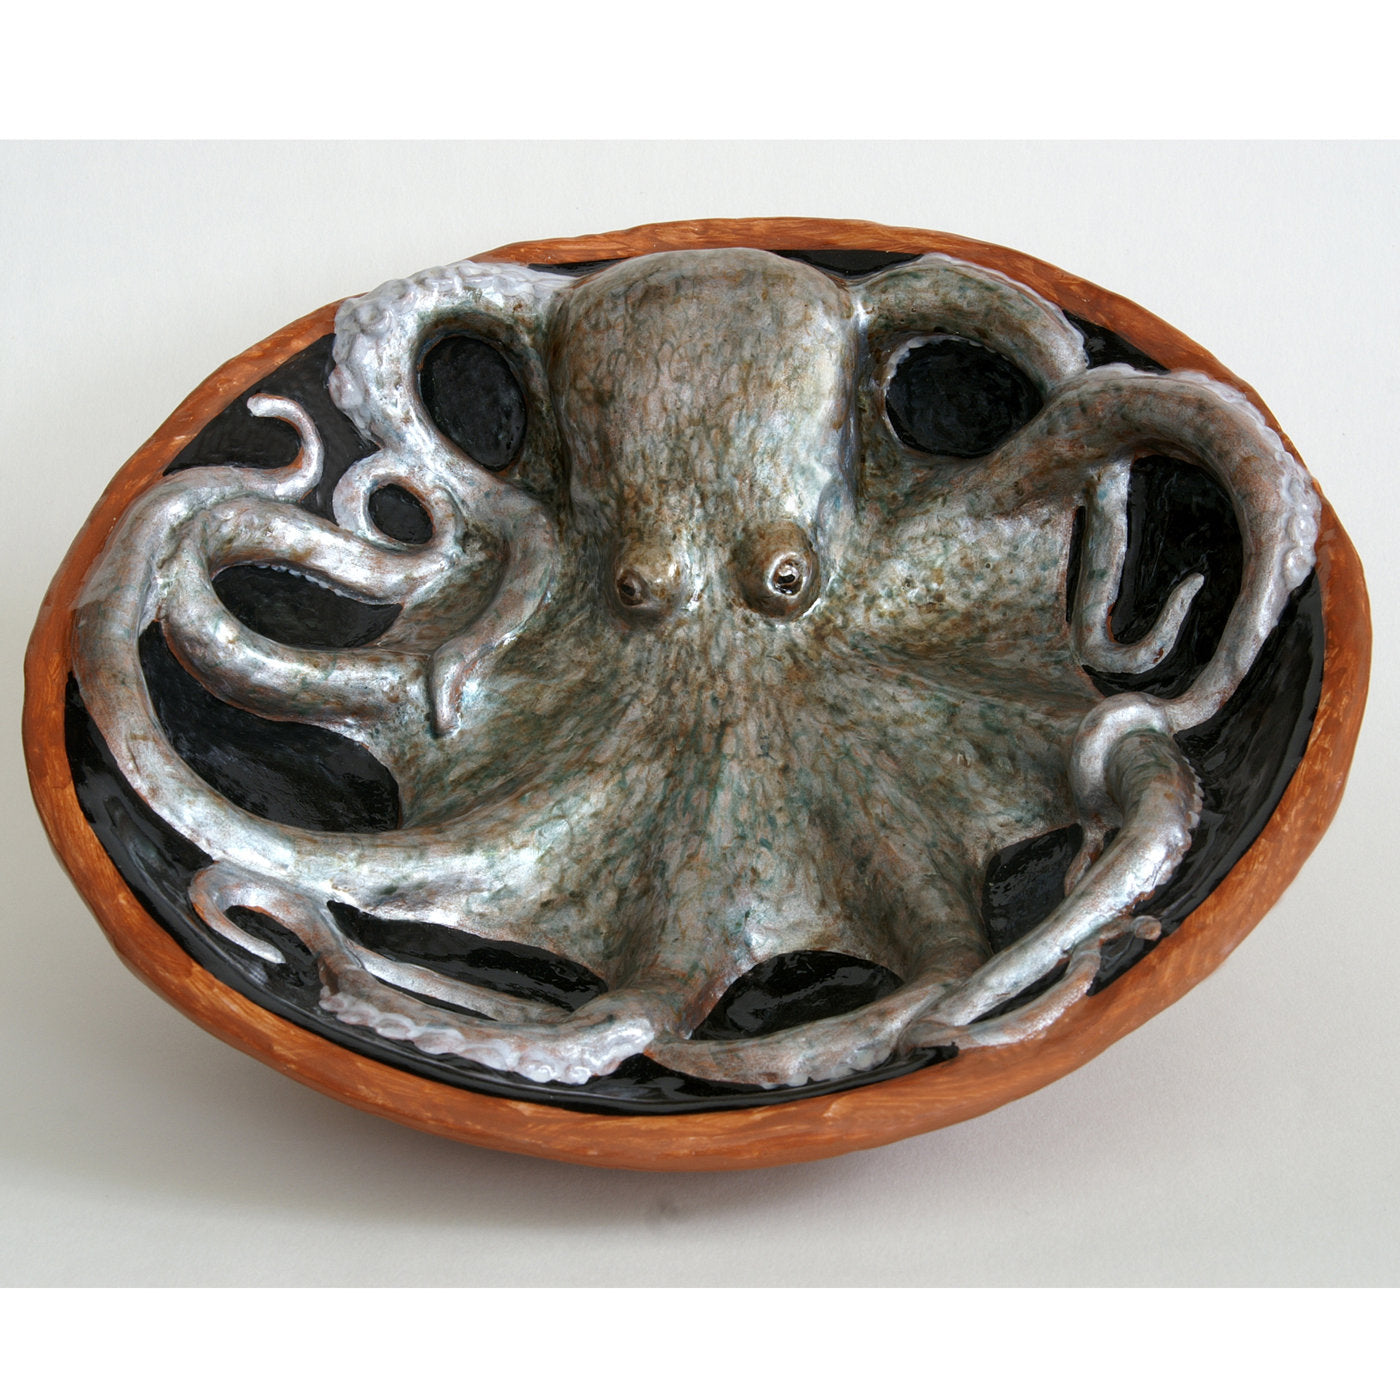 Sculptural Octopus in Bath Bowl - Alternative view 3